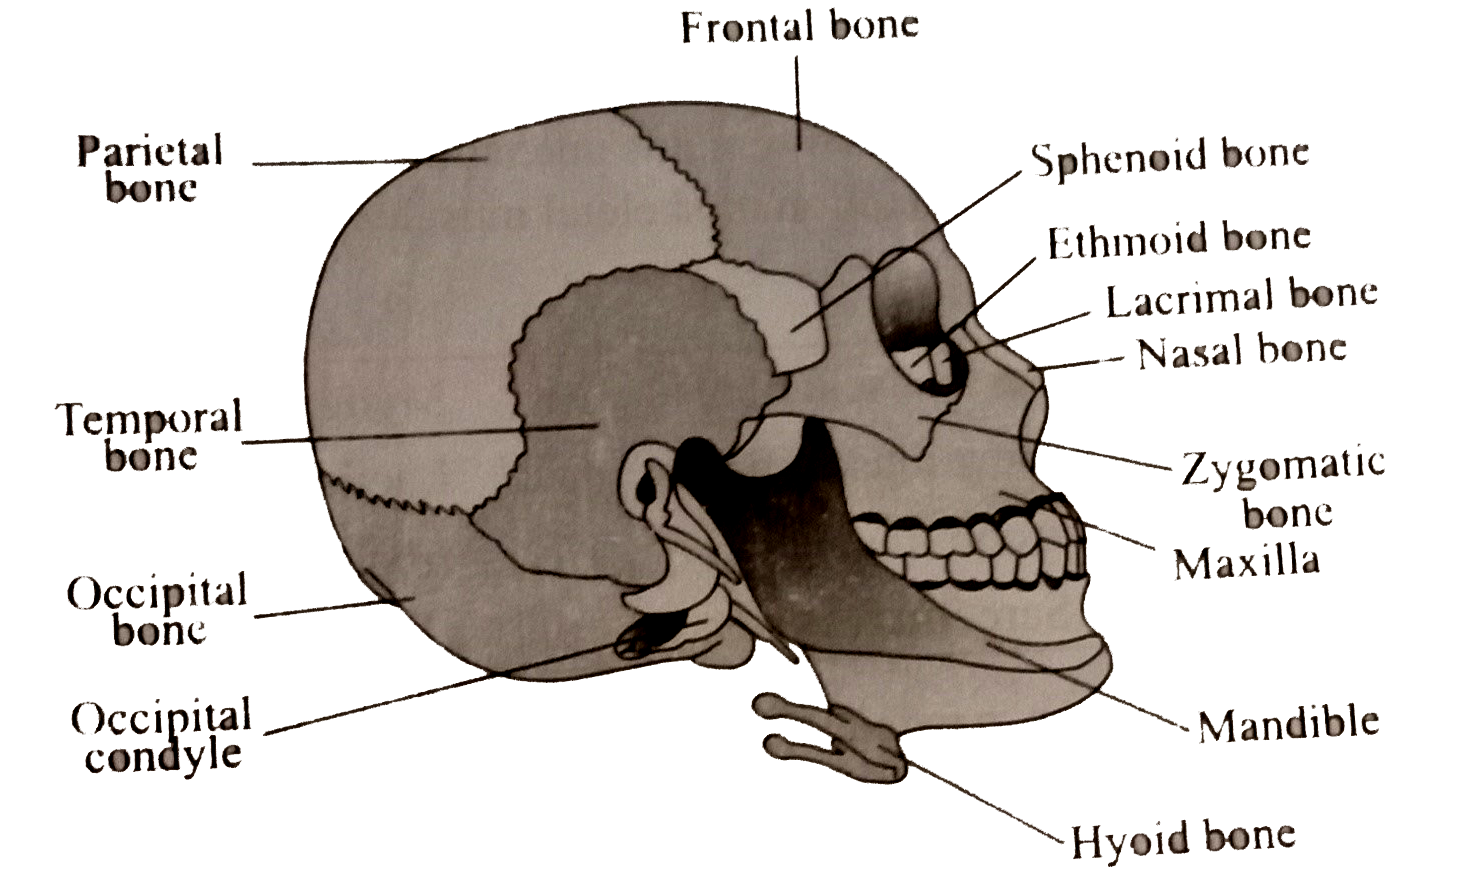 B Parietal Bone D Occipital Bone A Frontal Bone C Temporal Bone 5644